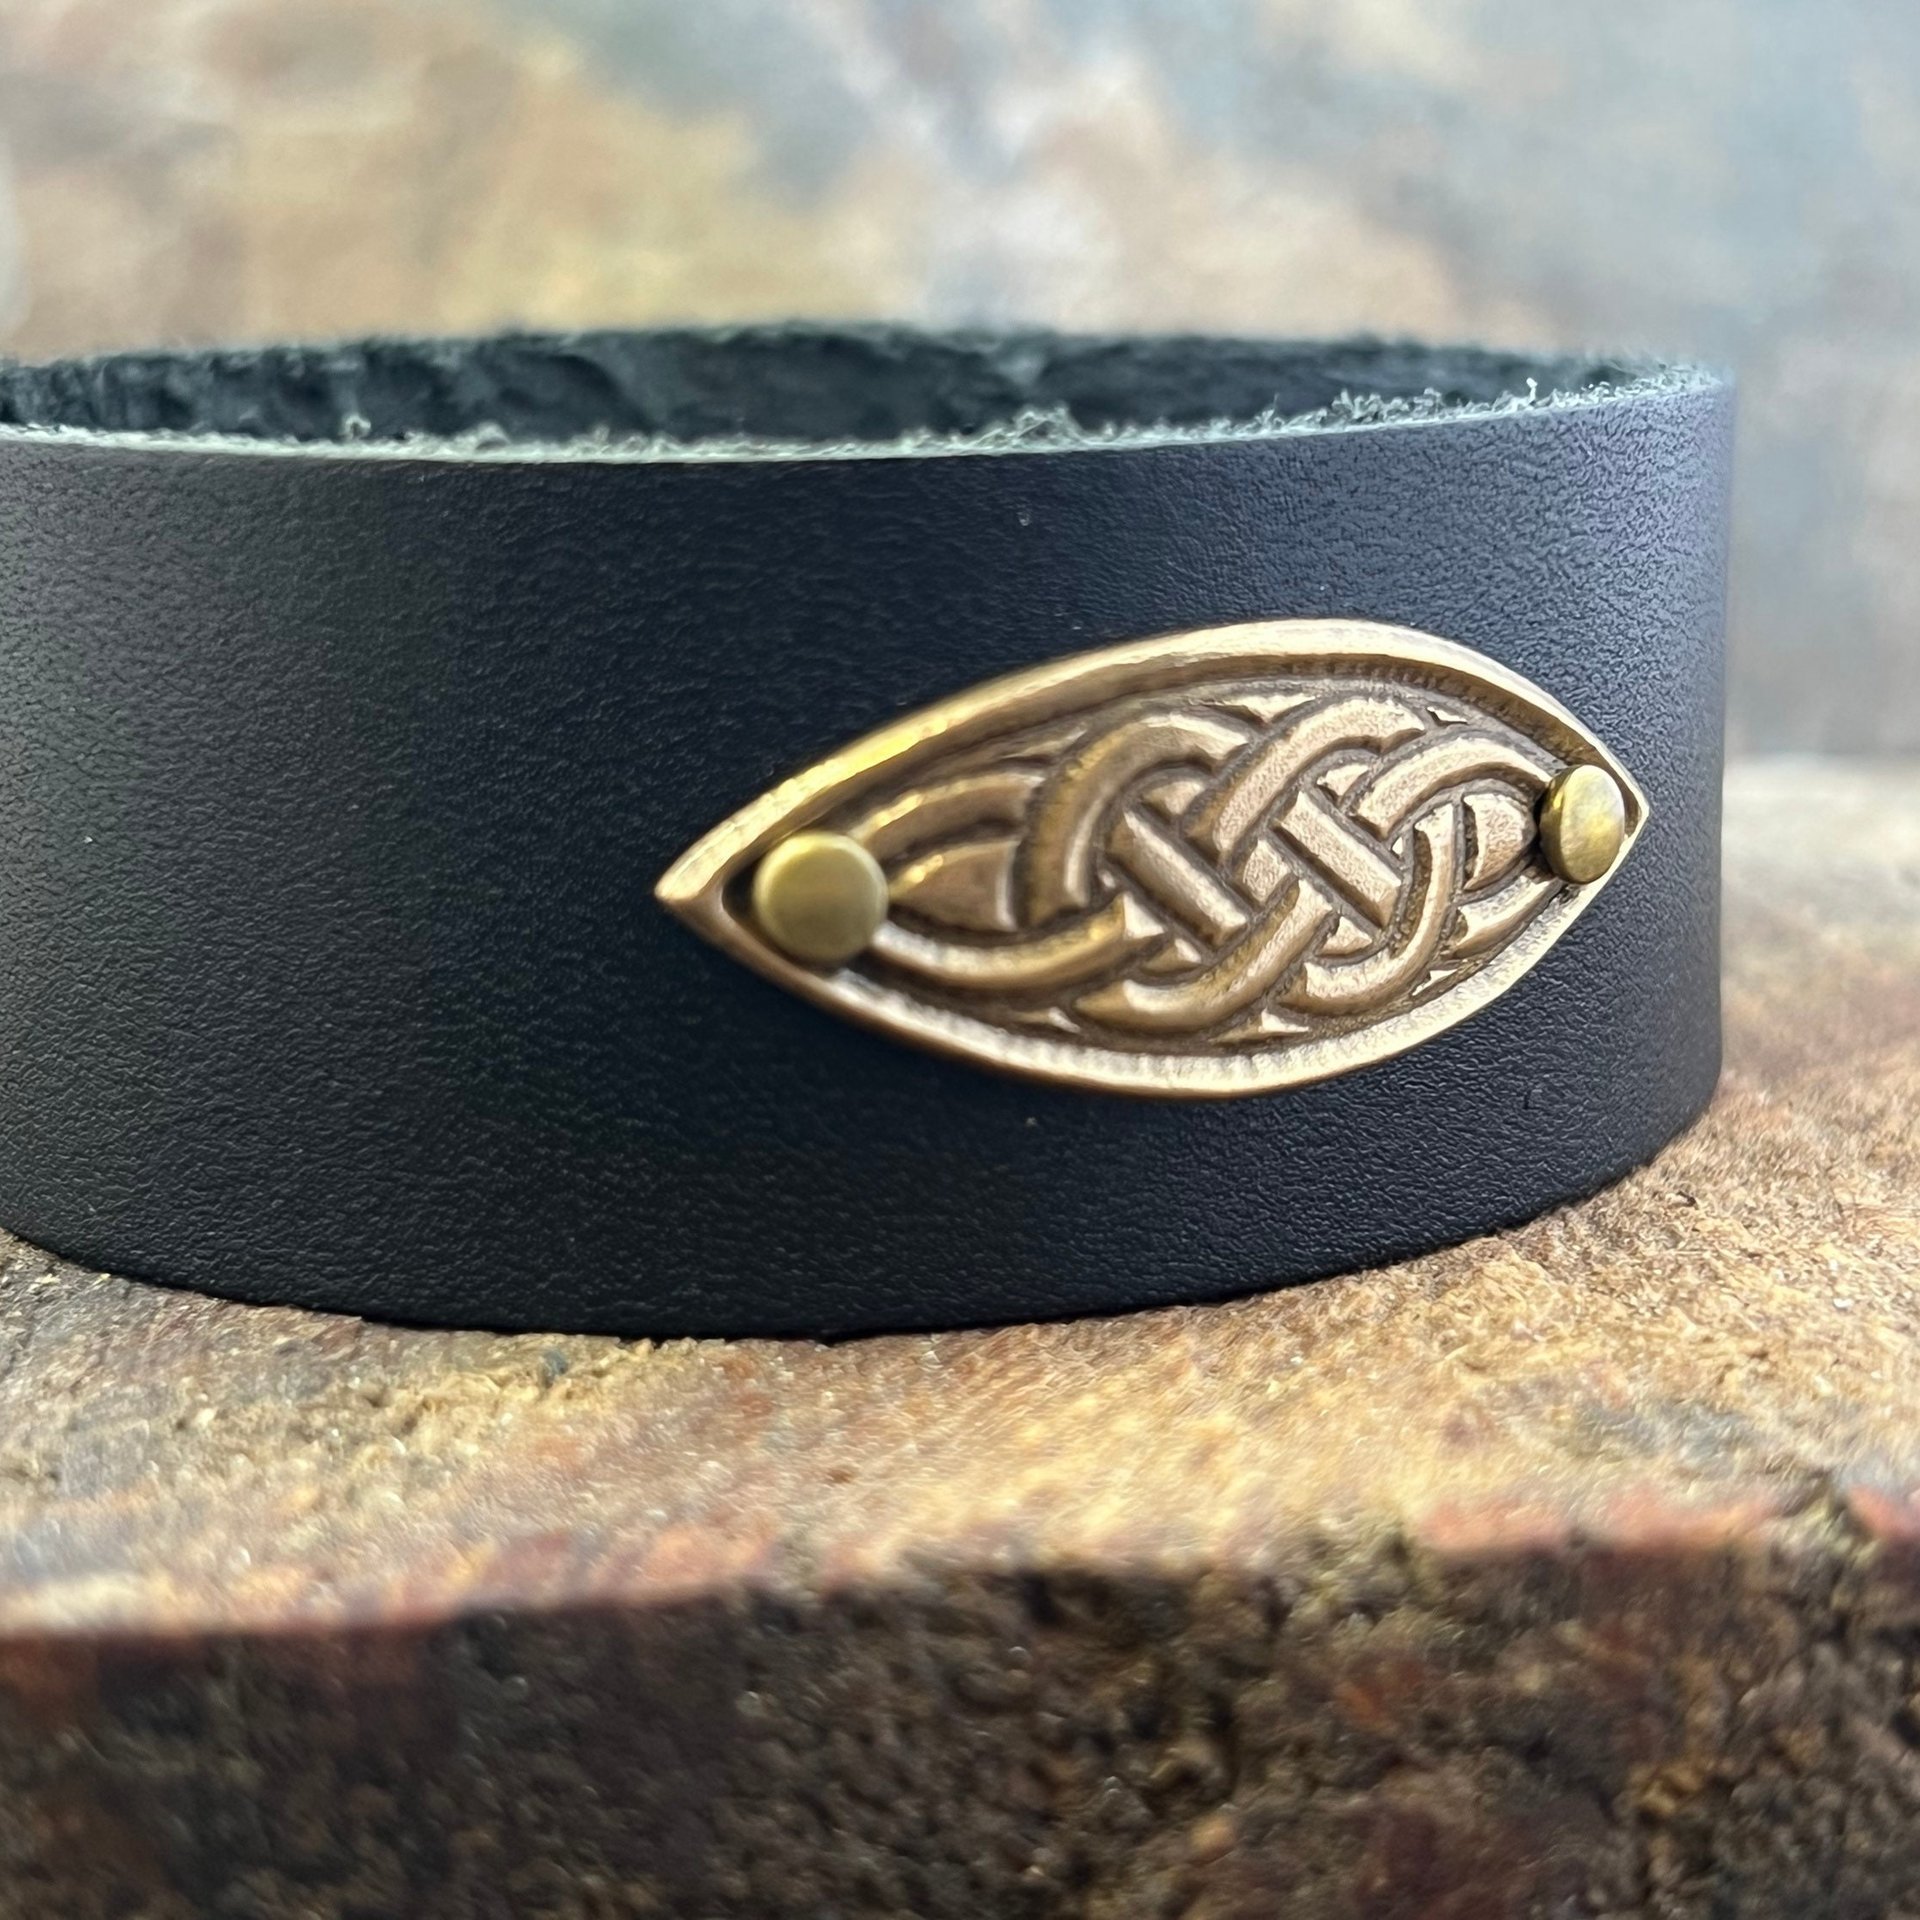 Celtic Knots, Bronze & Leather Cuff Bracelet, Irish Celtic, Unisex Jewelry, Black Leather Adjustable Cuff, Size 6.75-8, Earthy Rustic